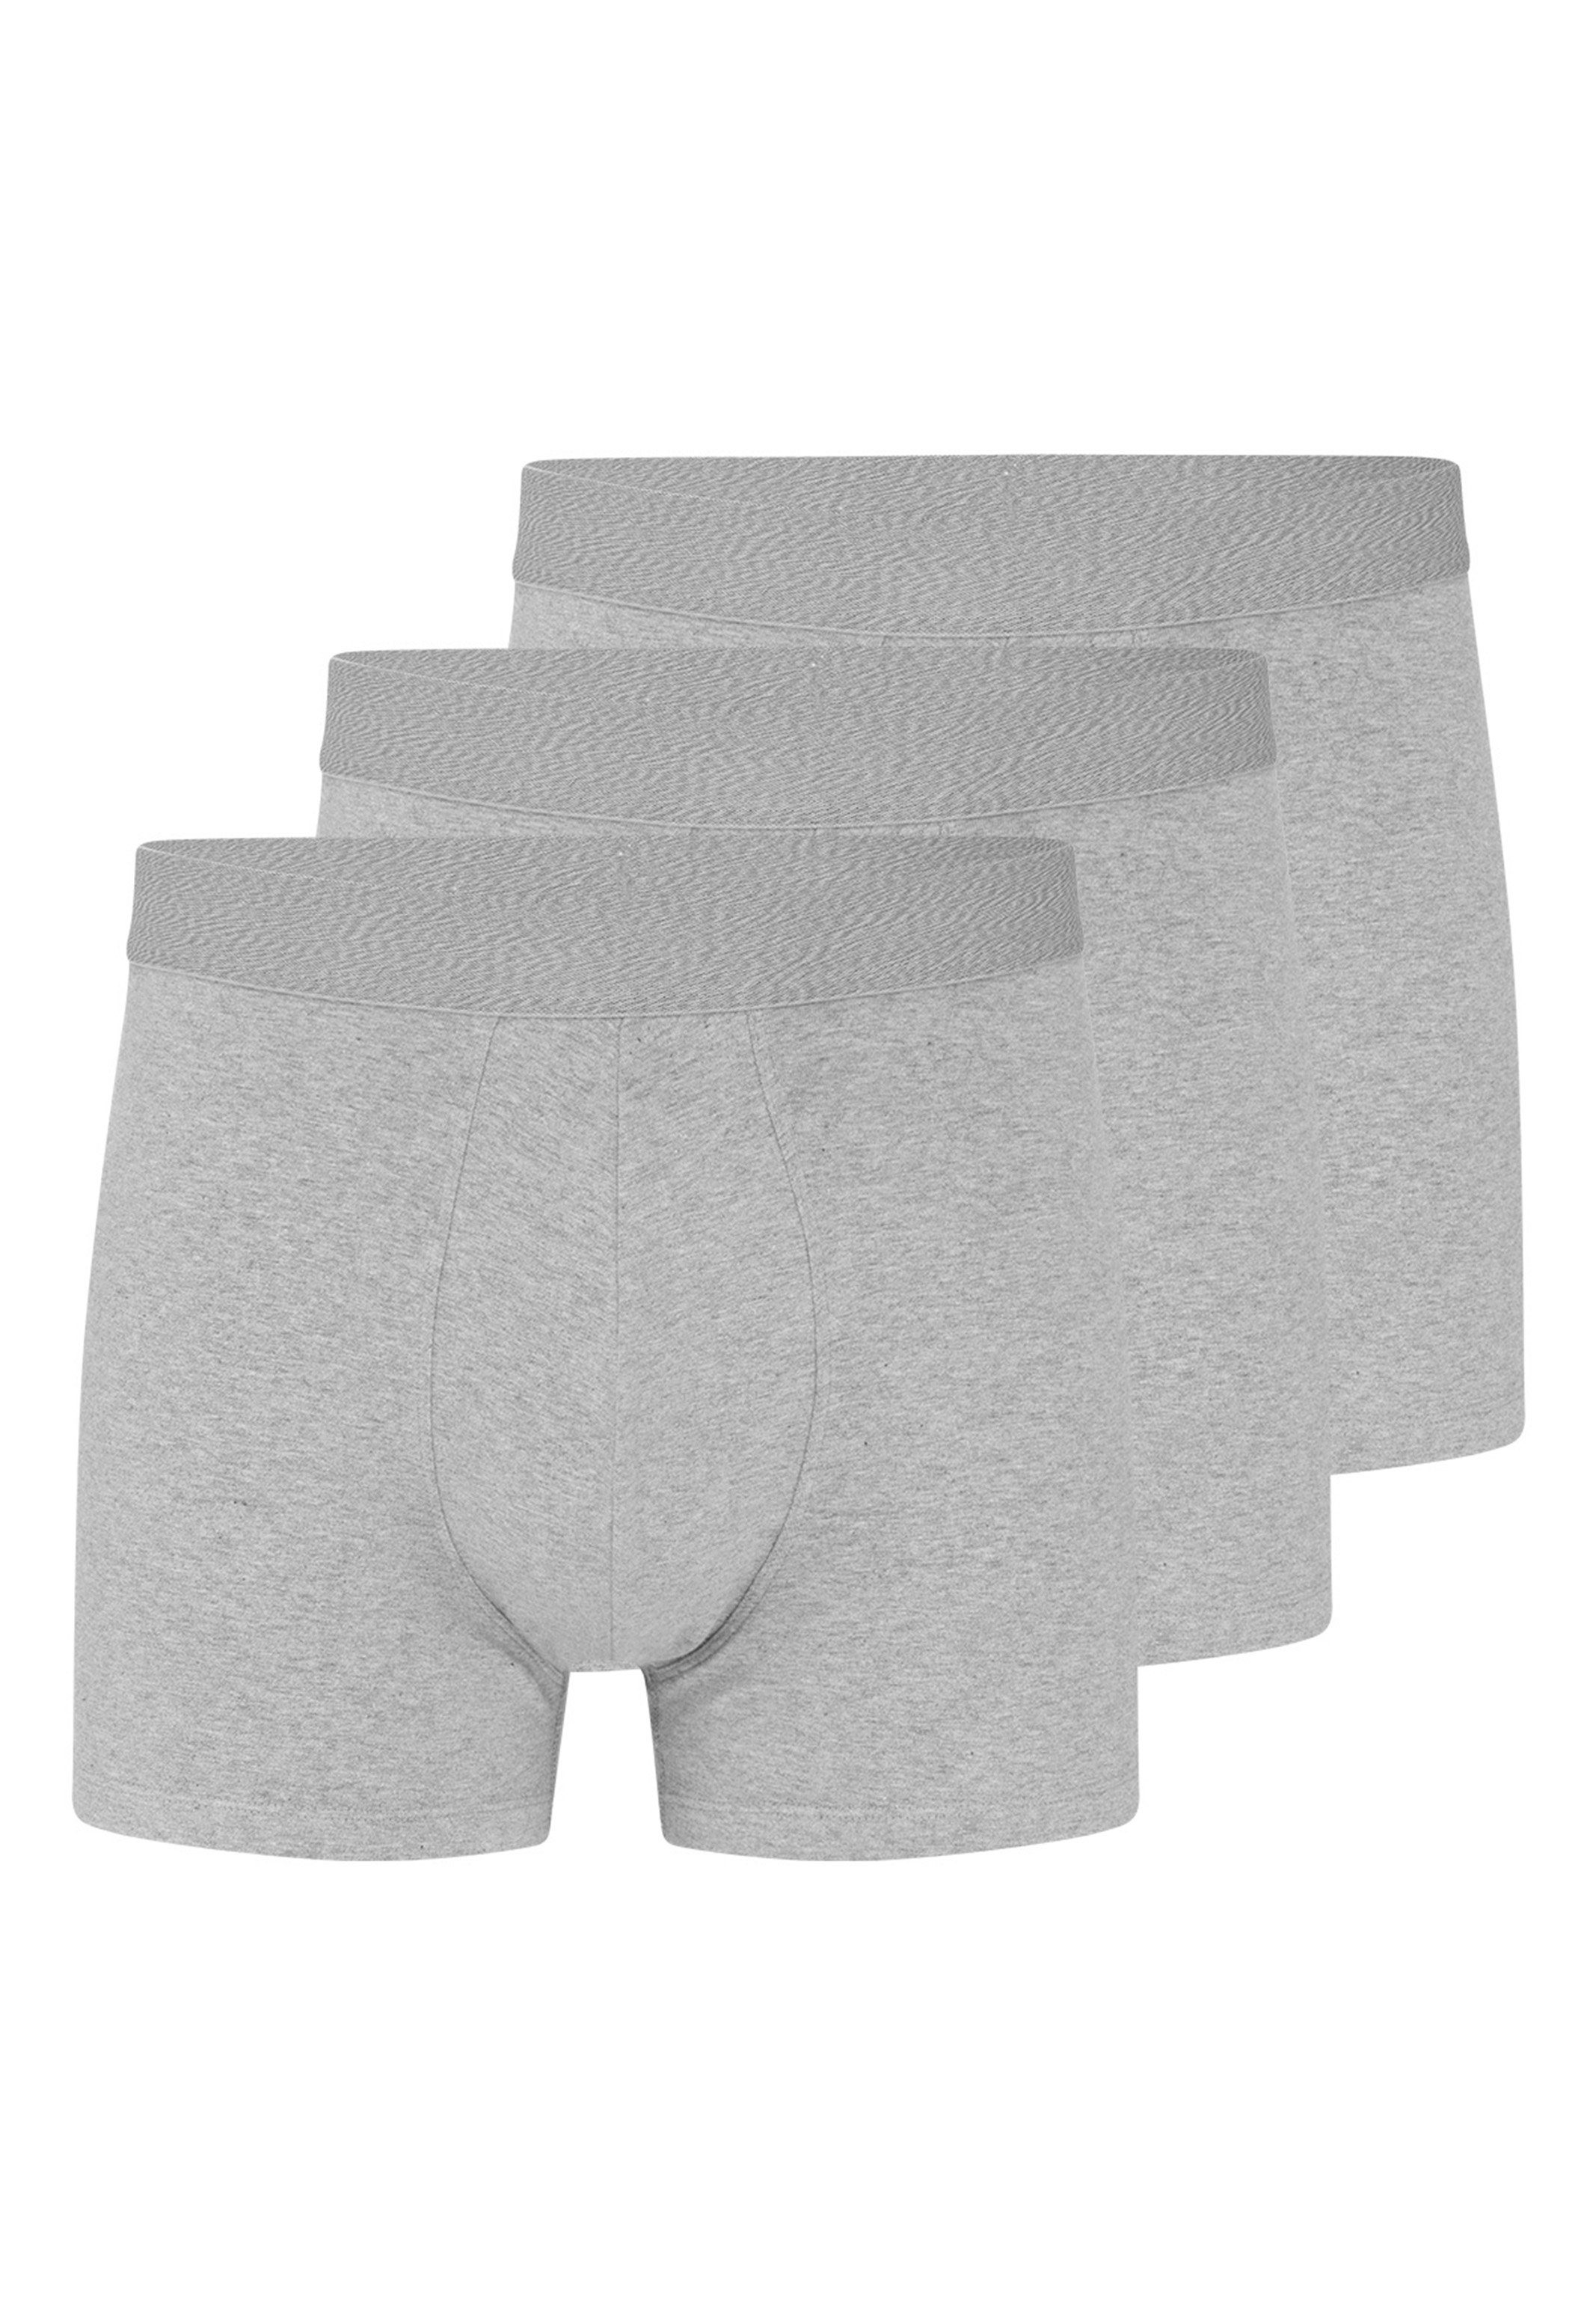 Almonu Ohne (Spar-Set, 3-St) Cotton Grau Boxer - Retro Organic Retro Baumwolle Pack - Melange - 3er Atmungsaktiv Pant Eingriff / Short